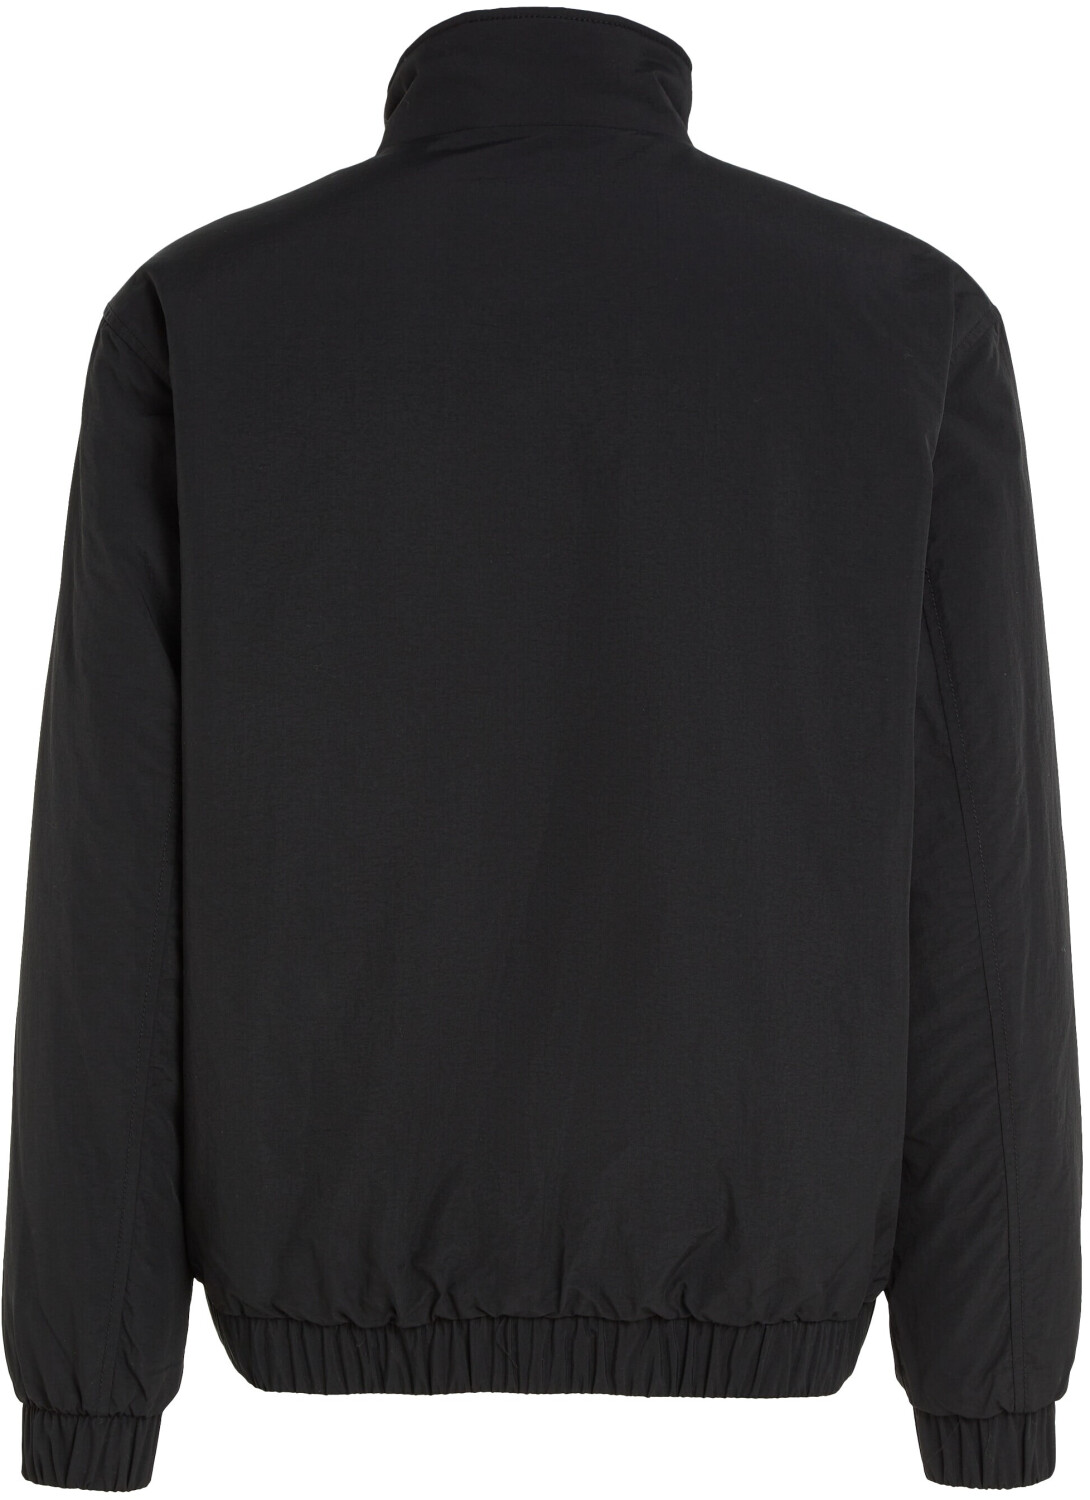 Best black £86.99 on Tommy Hilfiger from (DM0DM17238) (Today) Deals Essential Buy Padded TJM Jacket –